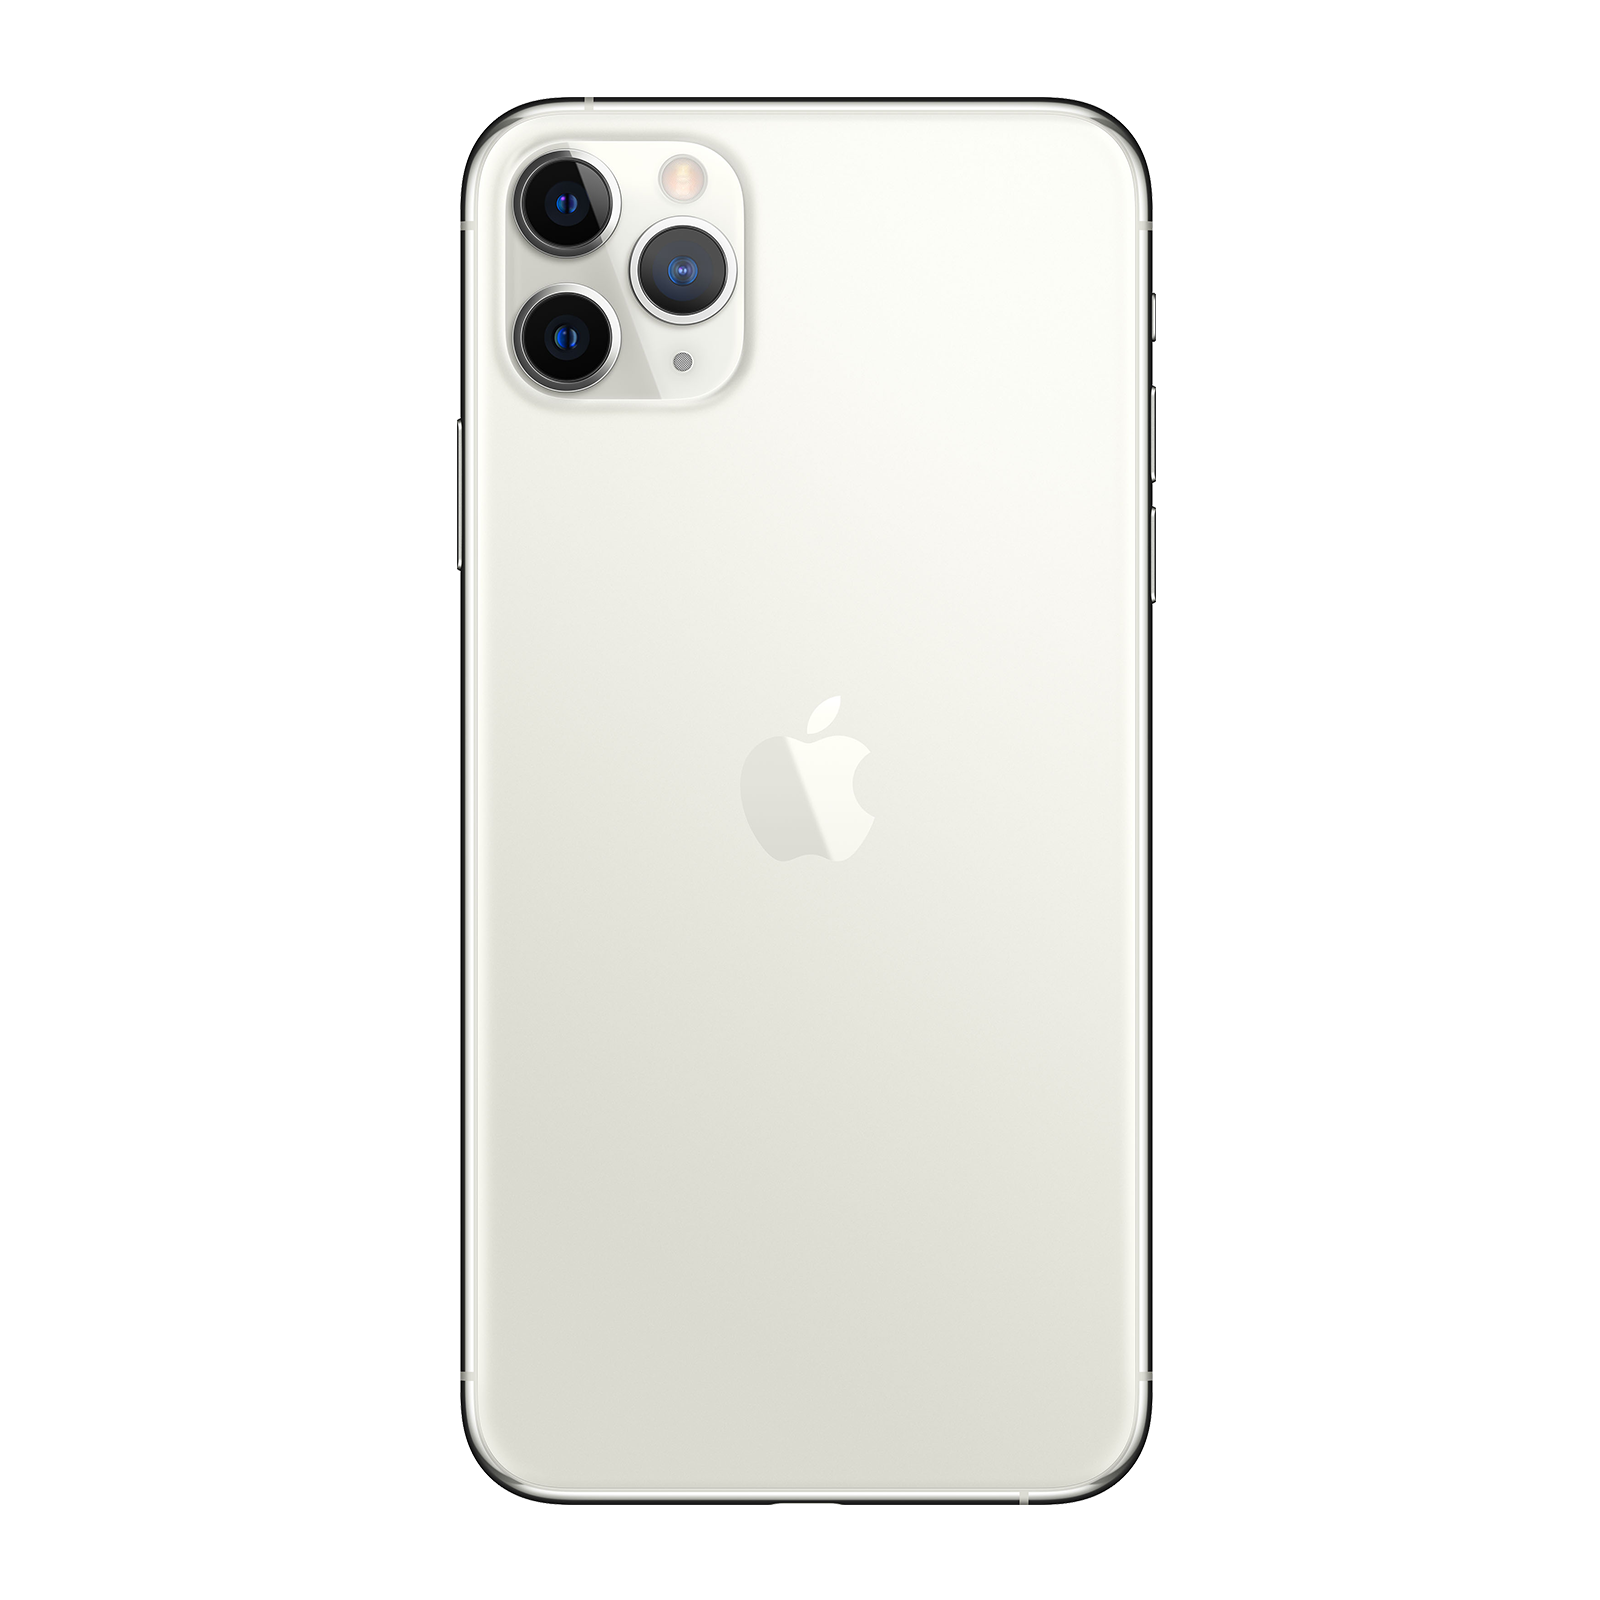 iPhone 11 Pro 256GB Silver Fair Unlocked - New Battery